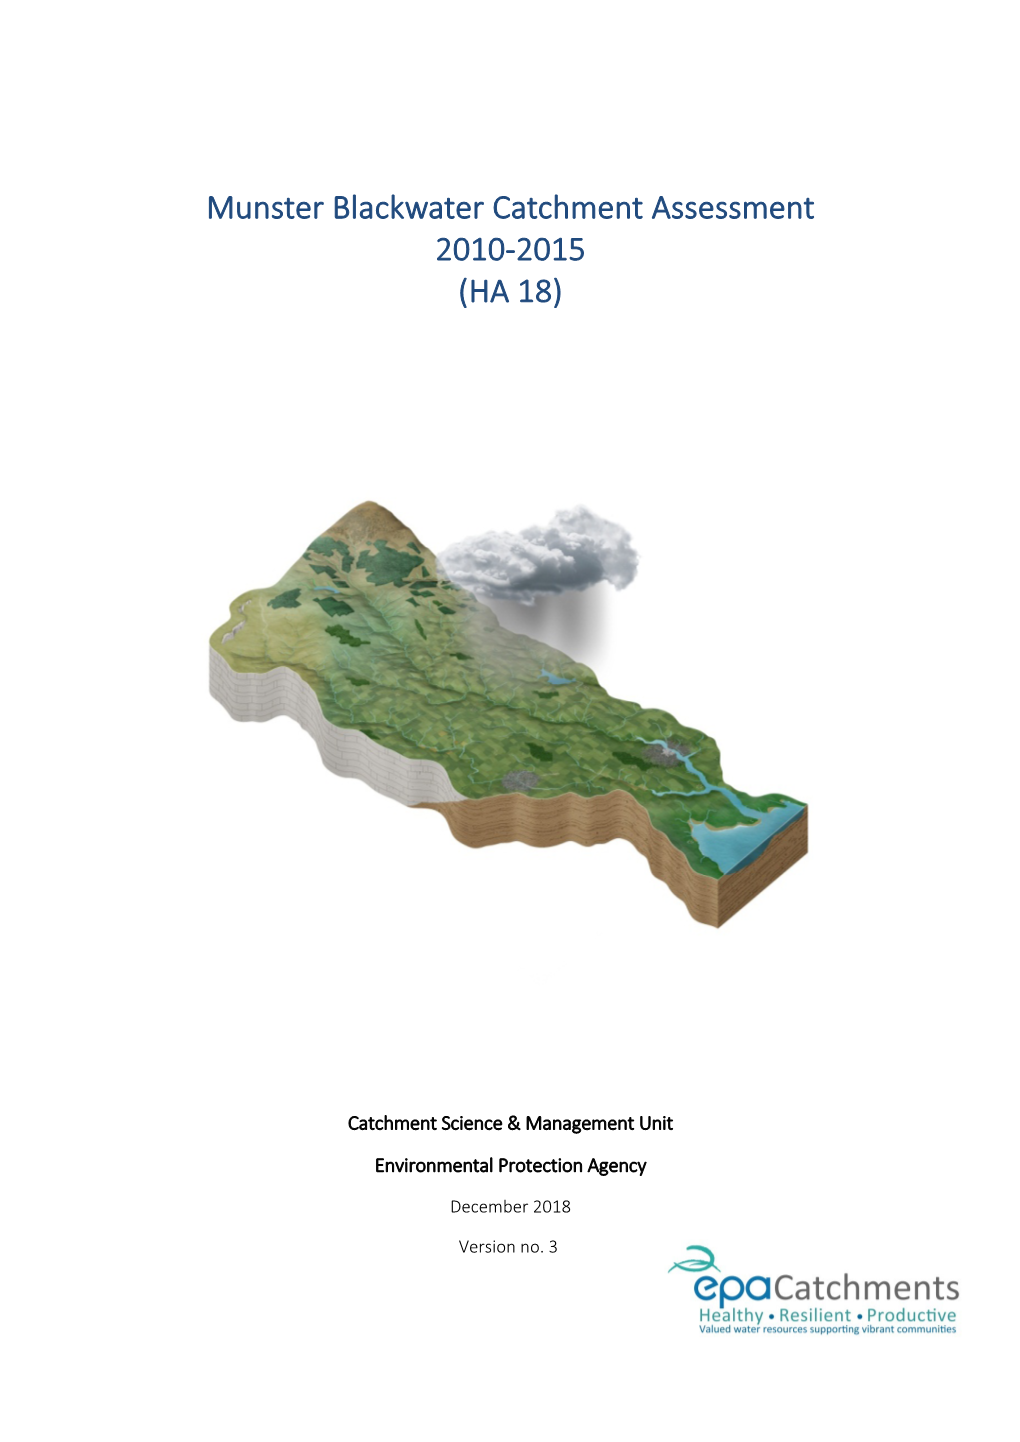 Munster Blackwater Catchment Assessment 2010-2015 (HA 18)